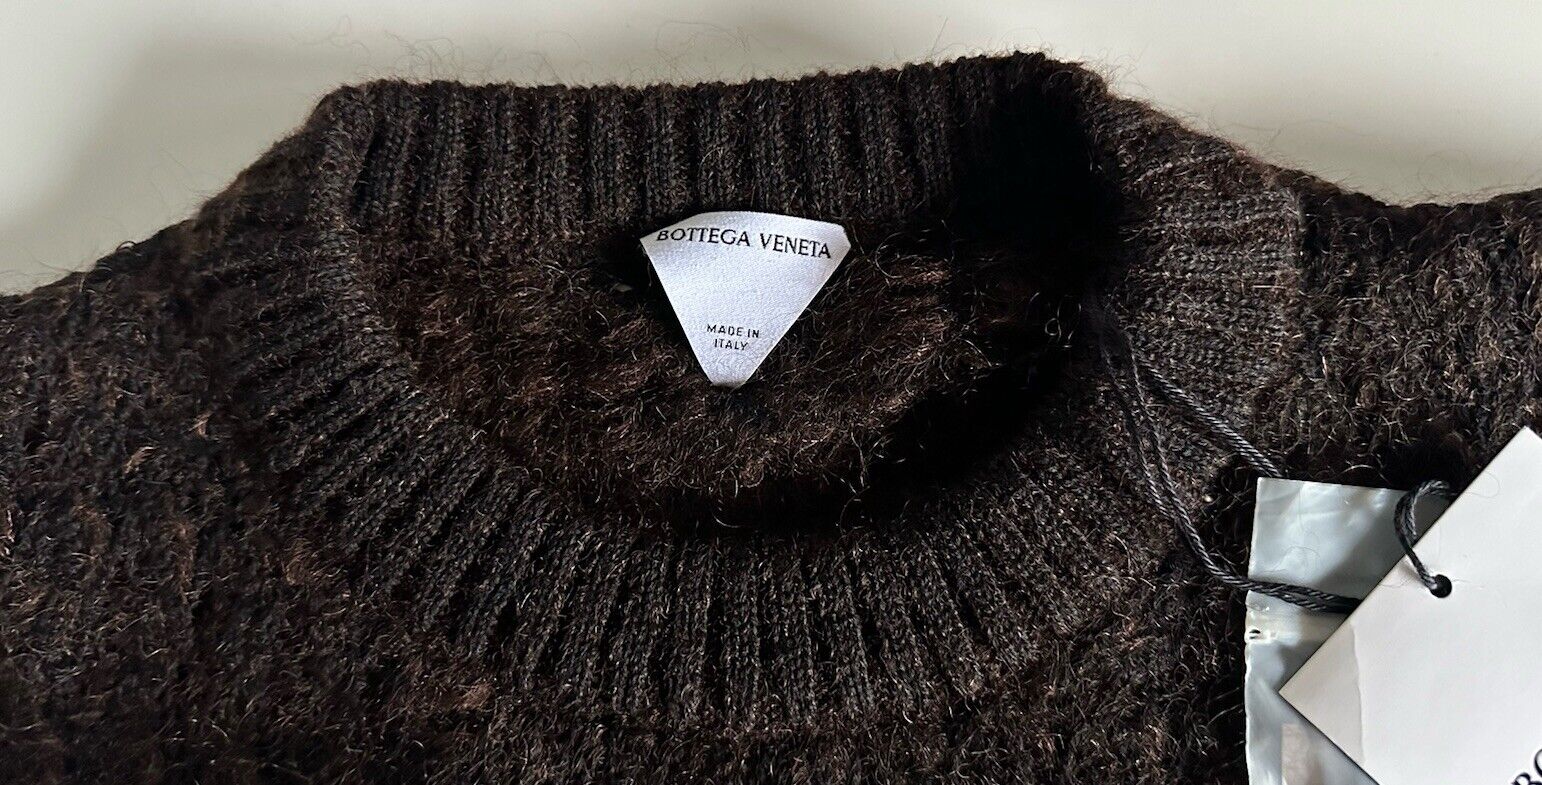 NWT $1350 Bottega Veneta Wool/Mohair Pullover Sweater Large 720826 Italy